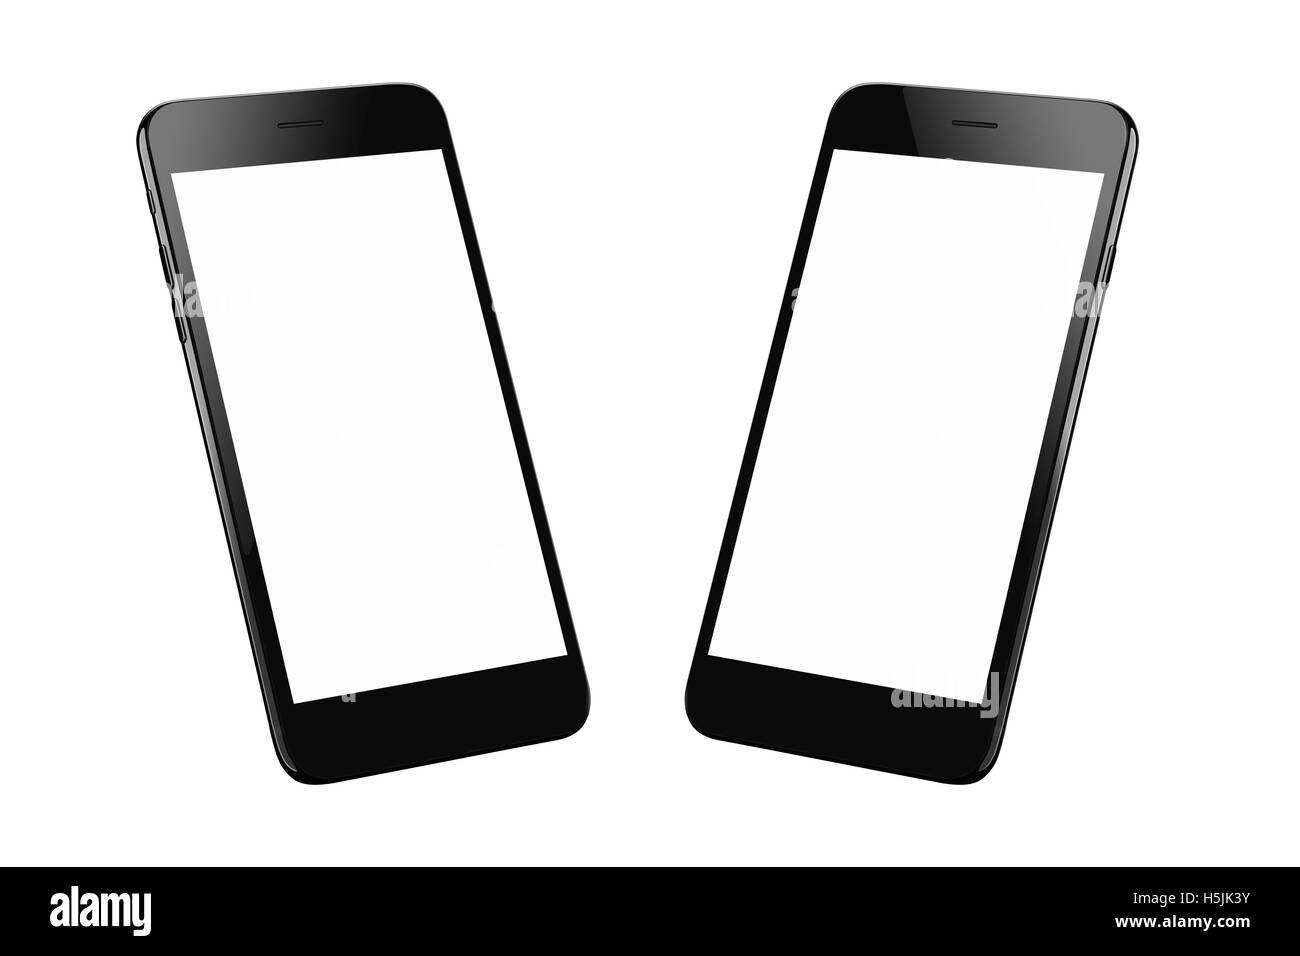 Schwarze moderne Smartphone isoliert. Zwei isometrische Positionen. Leerer Bildschirm für Mock-up. Stockfoto